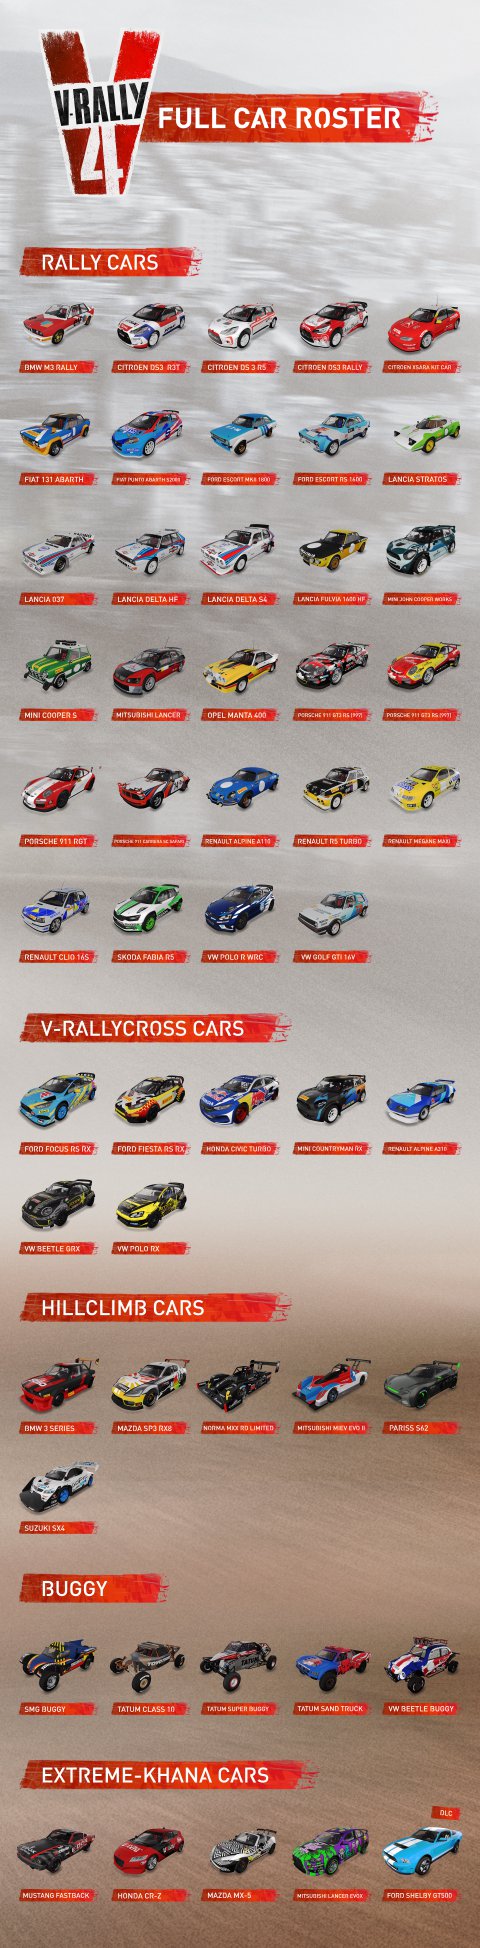 V Rally 4 Cars.jpg